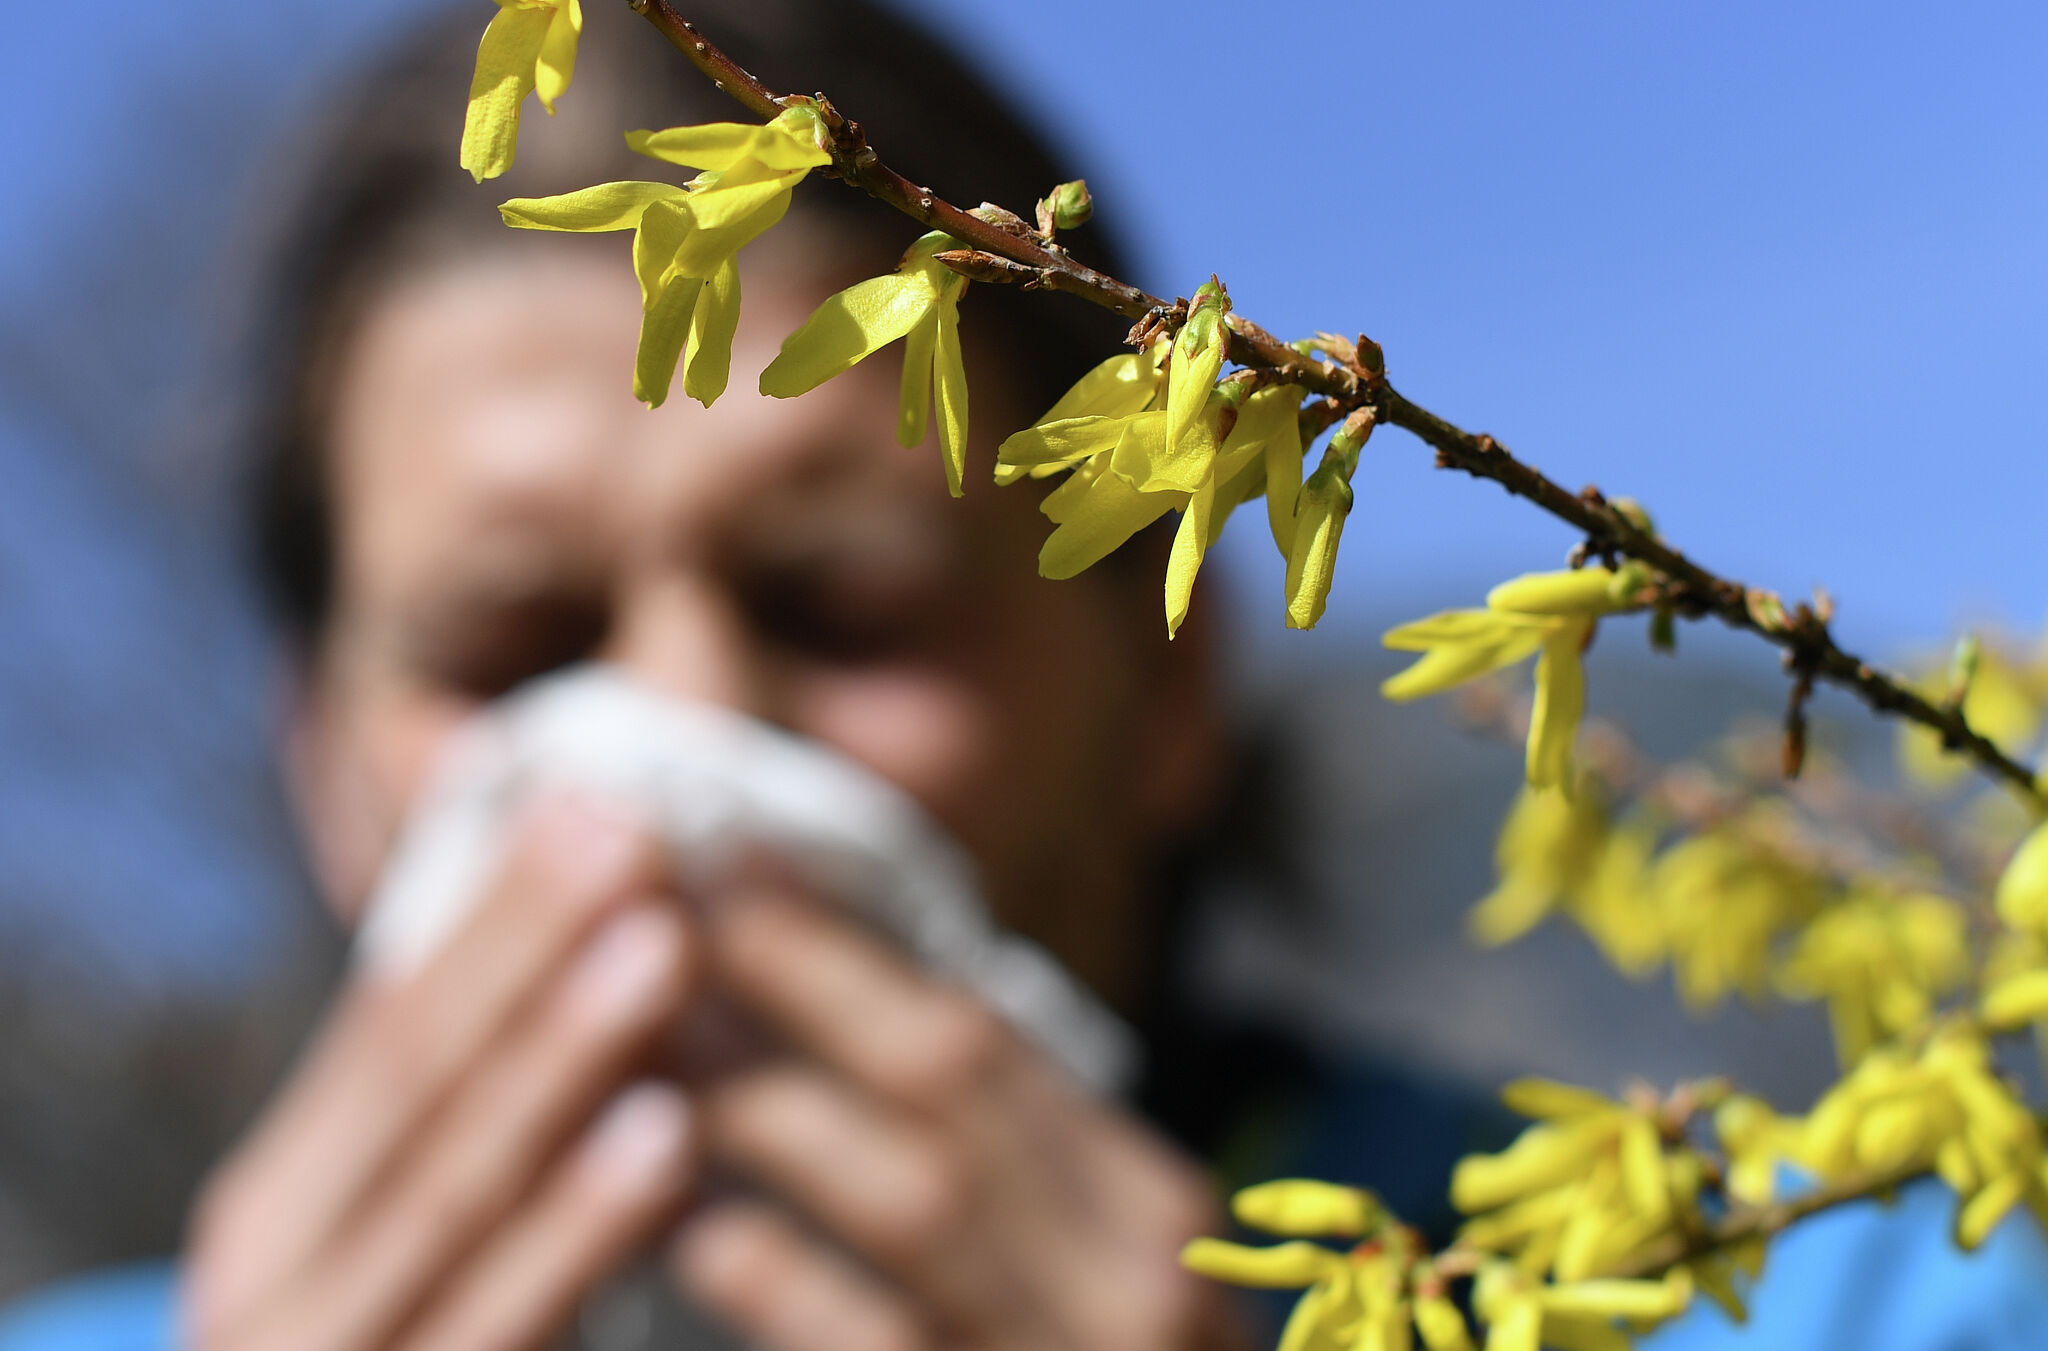 Allergy symptoms may worsen due to Bay Area's prolonged pollen season